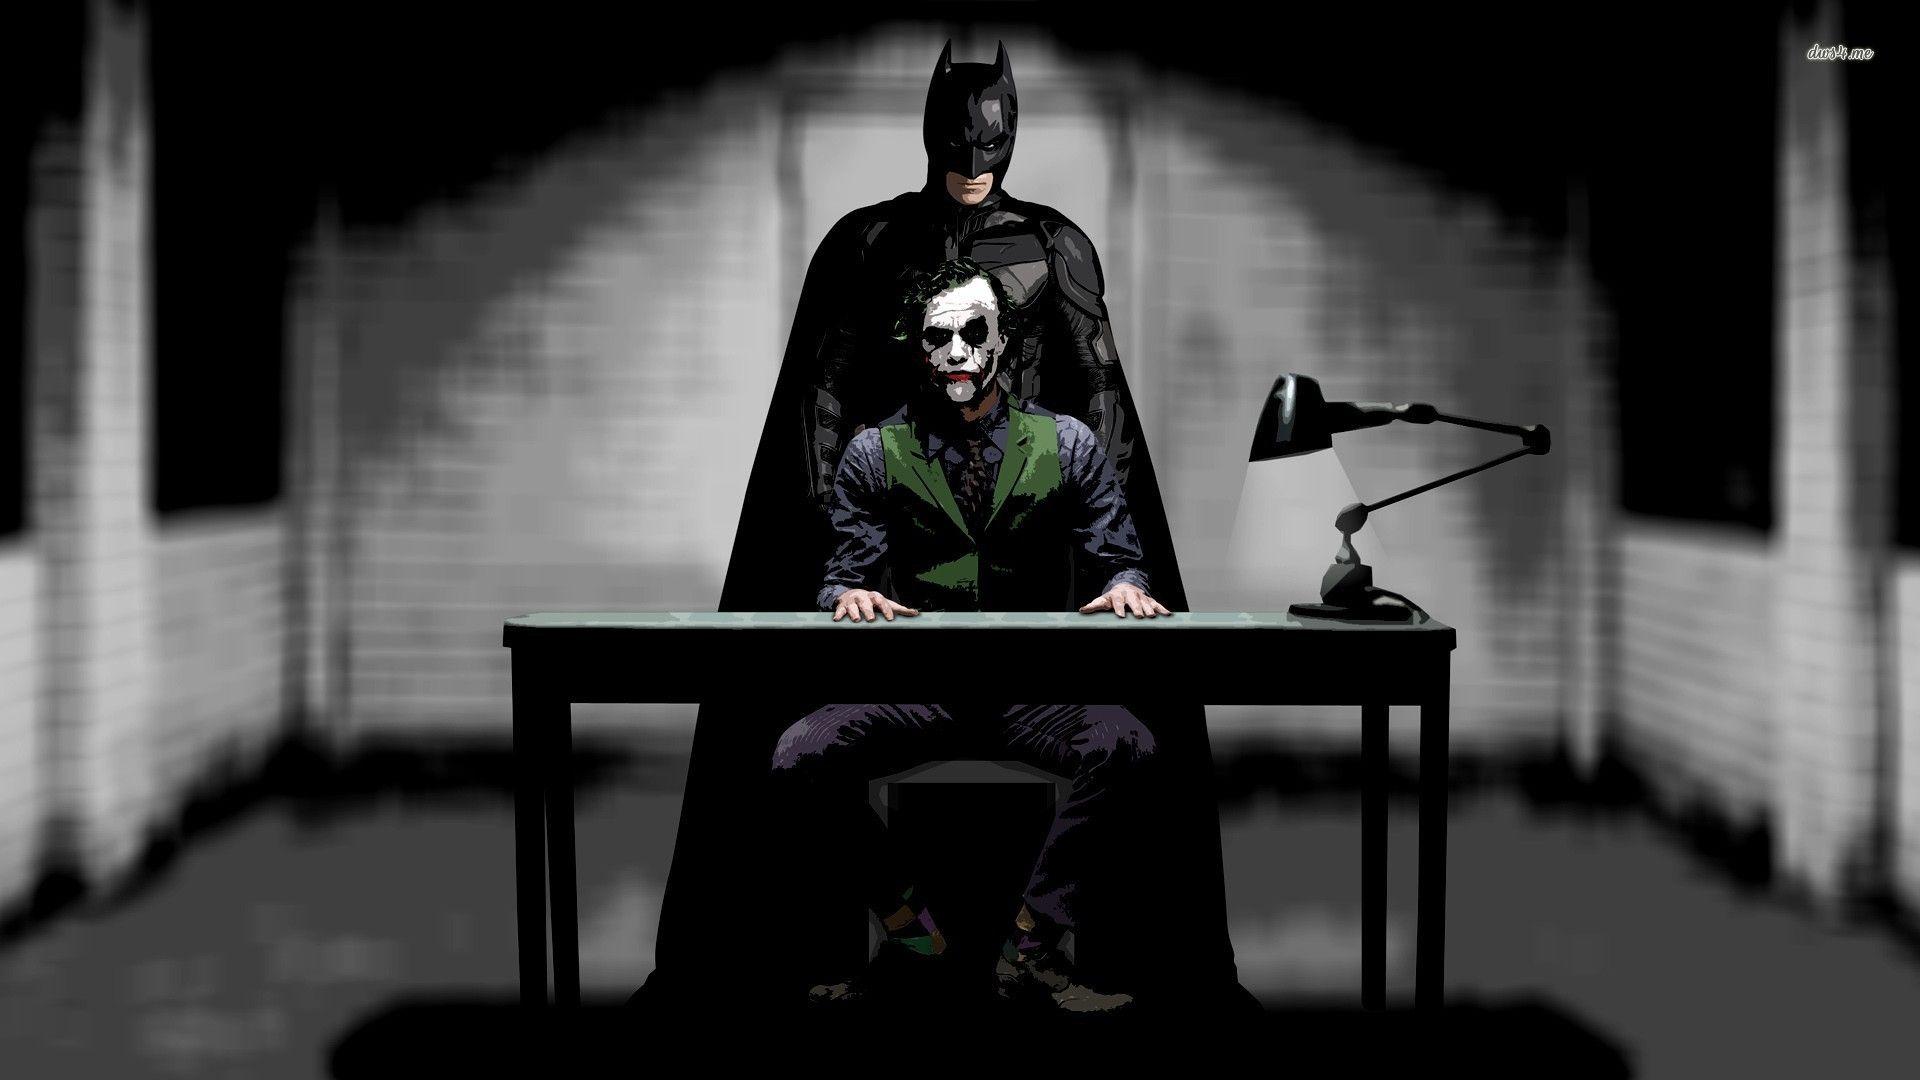 Batman interrogates the Joker wallpaper and image